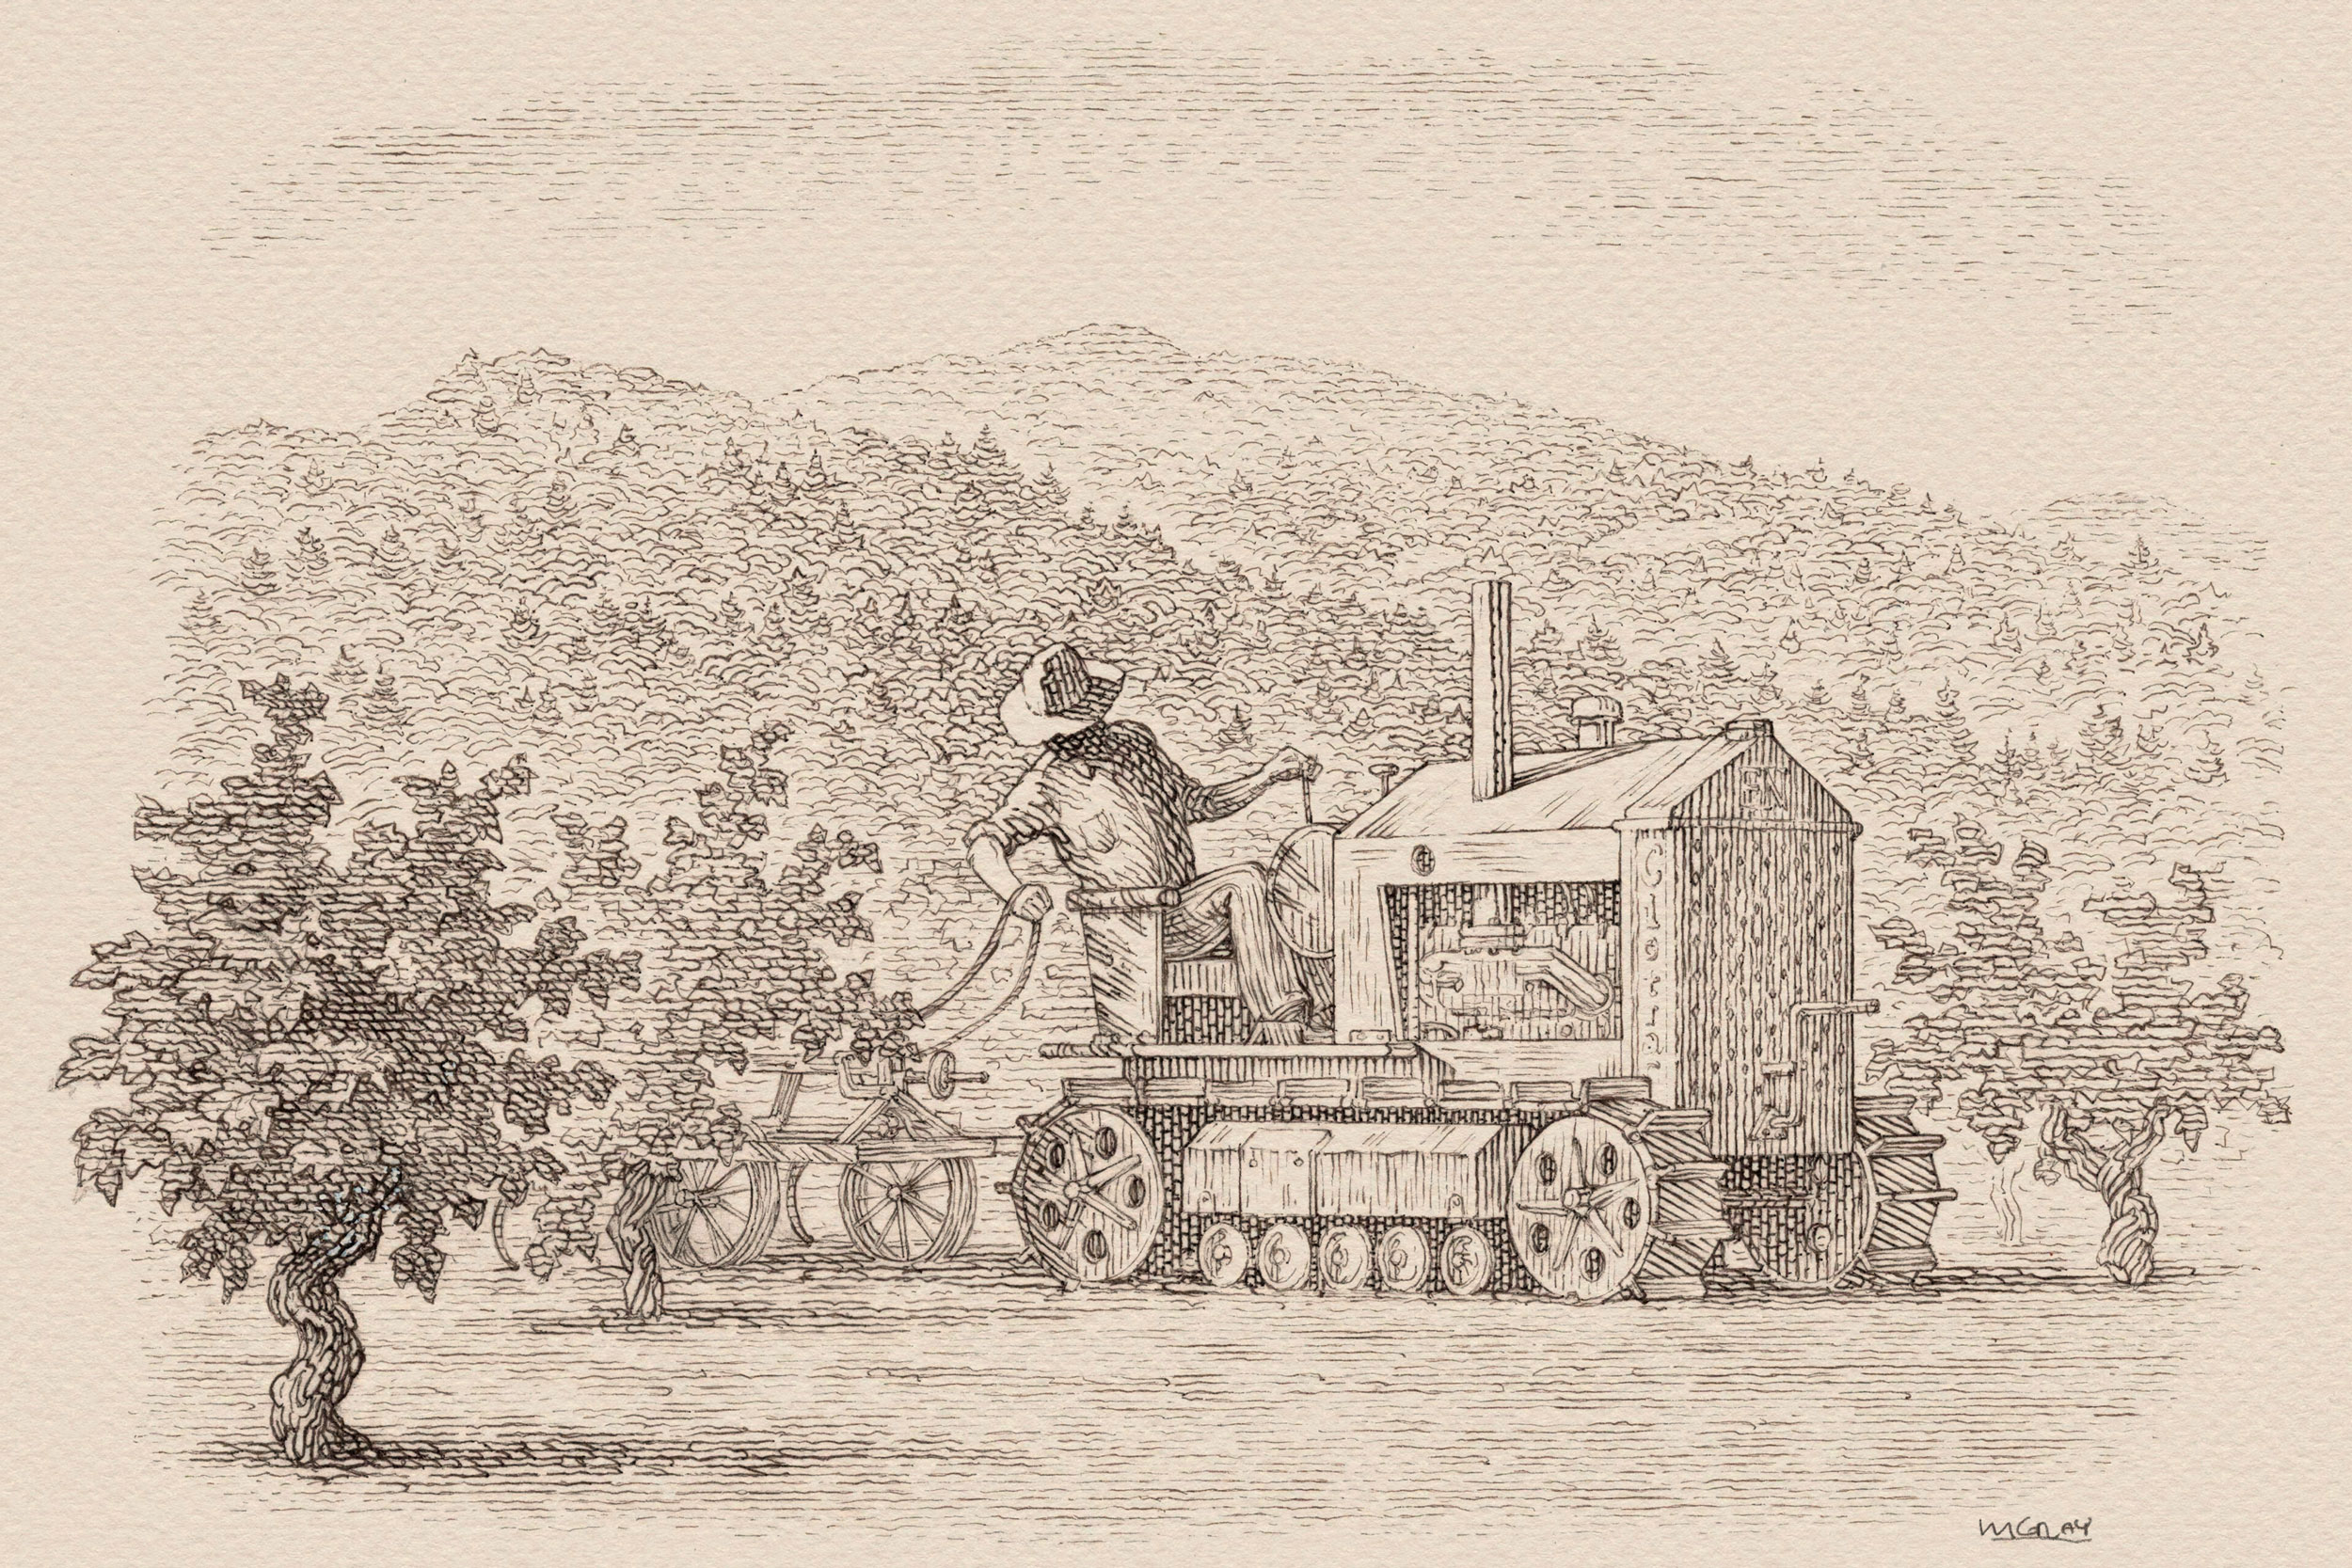 Morisoli Illustration of Tractor and Vines